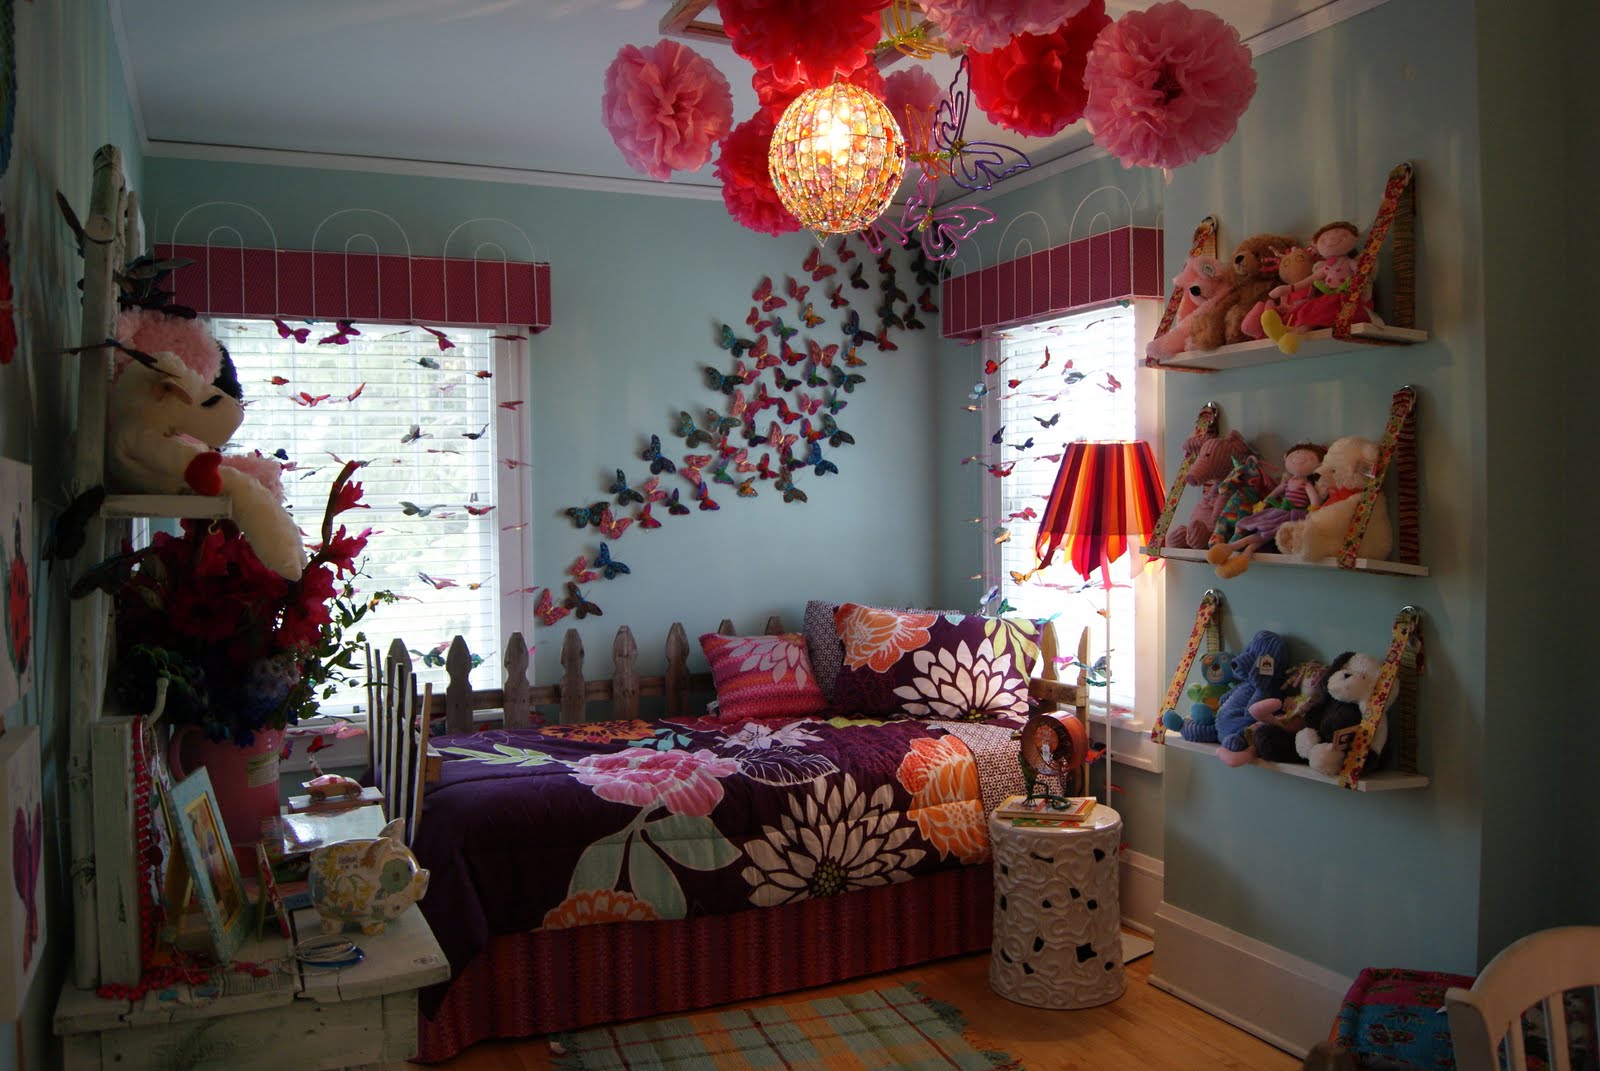 Decorating Bedroom With Butterflies